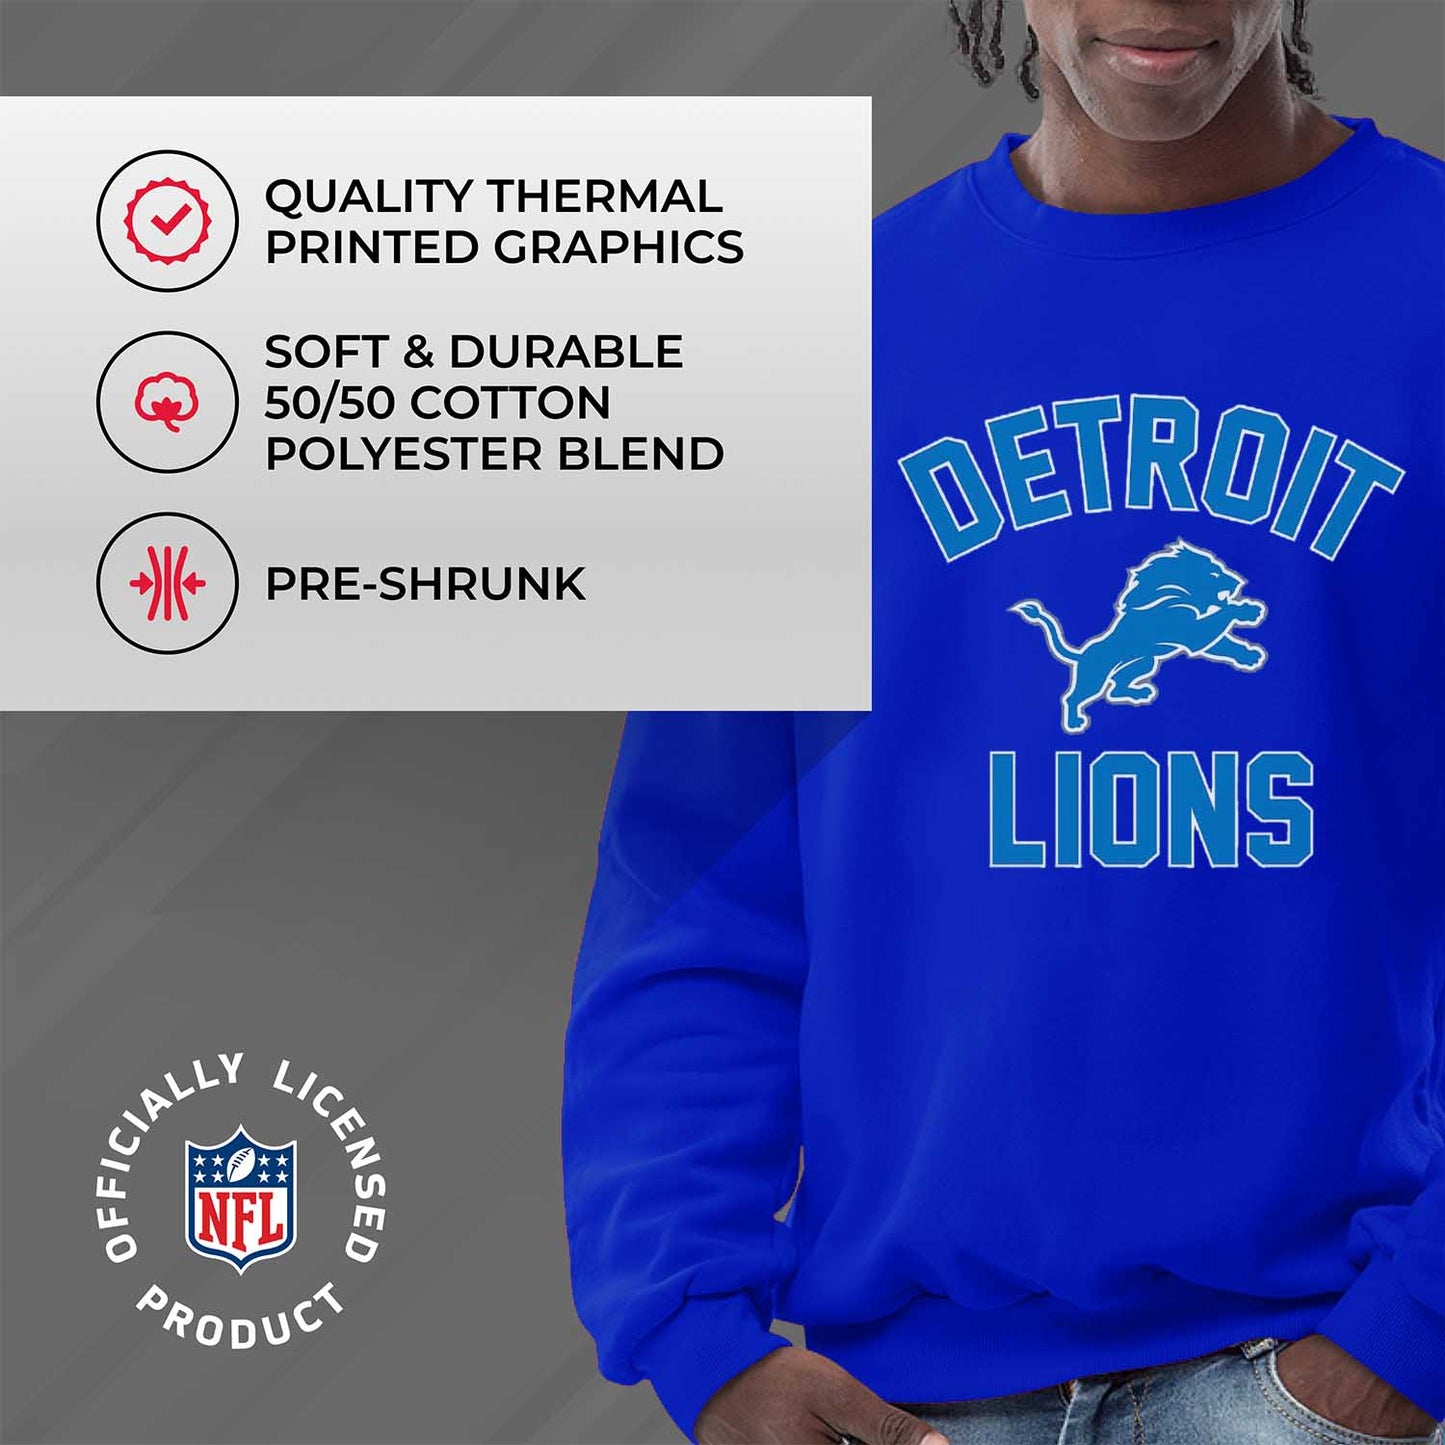 Detroit Lions NFL Adult Gameday Football Crewneck Sweatshirt - Royal